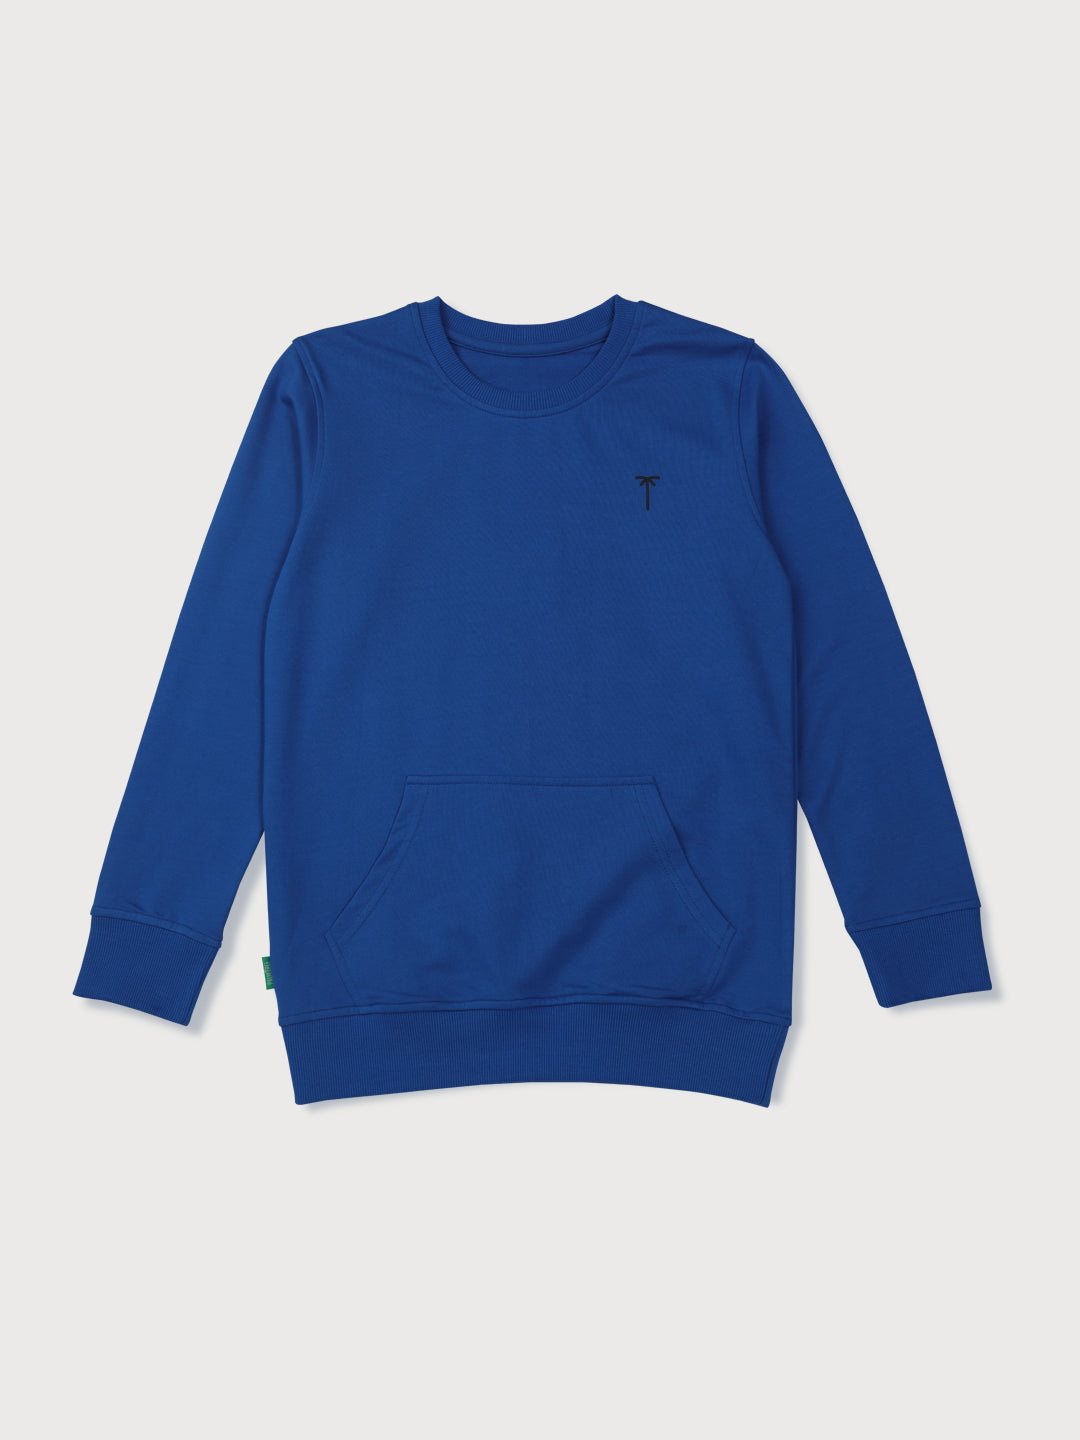 Boys Blue Solid Cotton Sweat Shirt